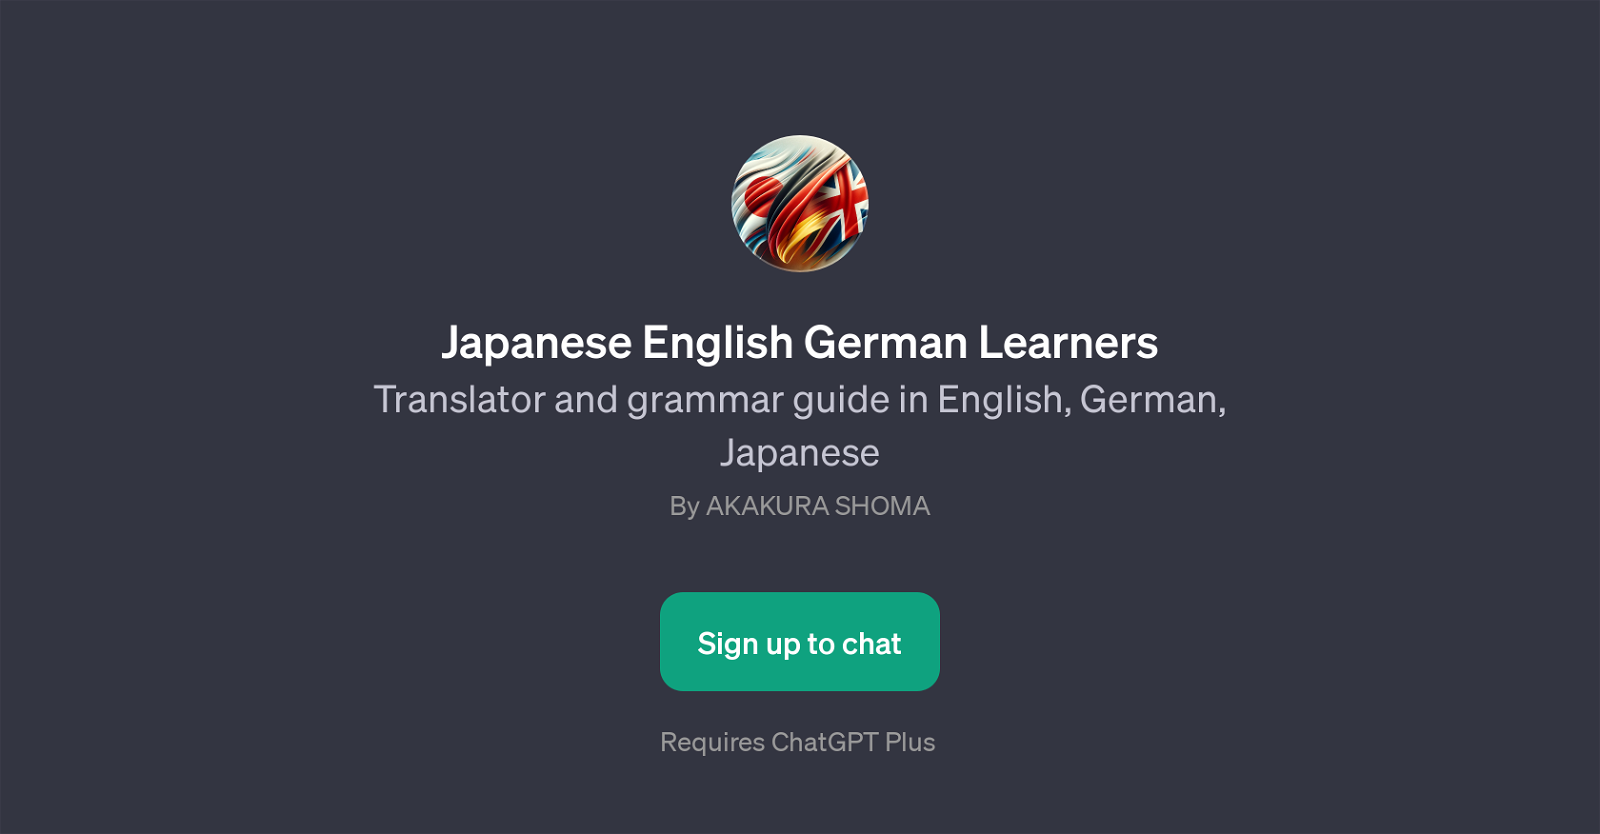 Japanese English German Learners website